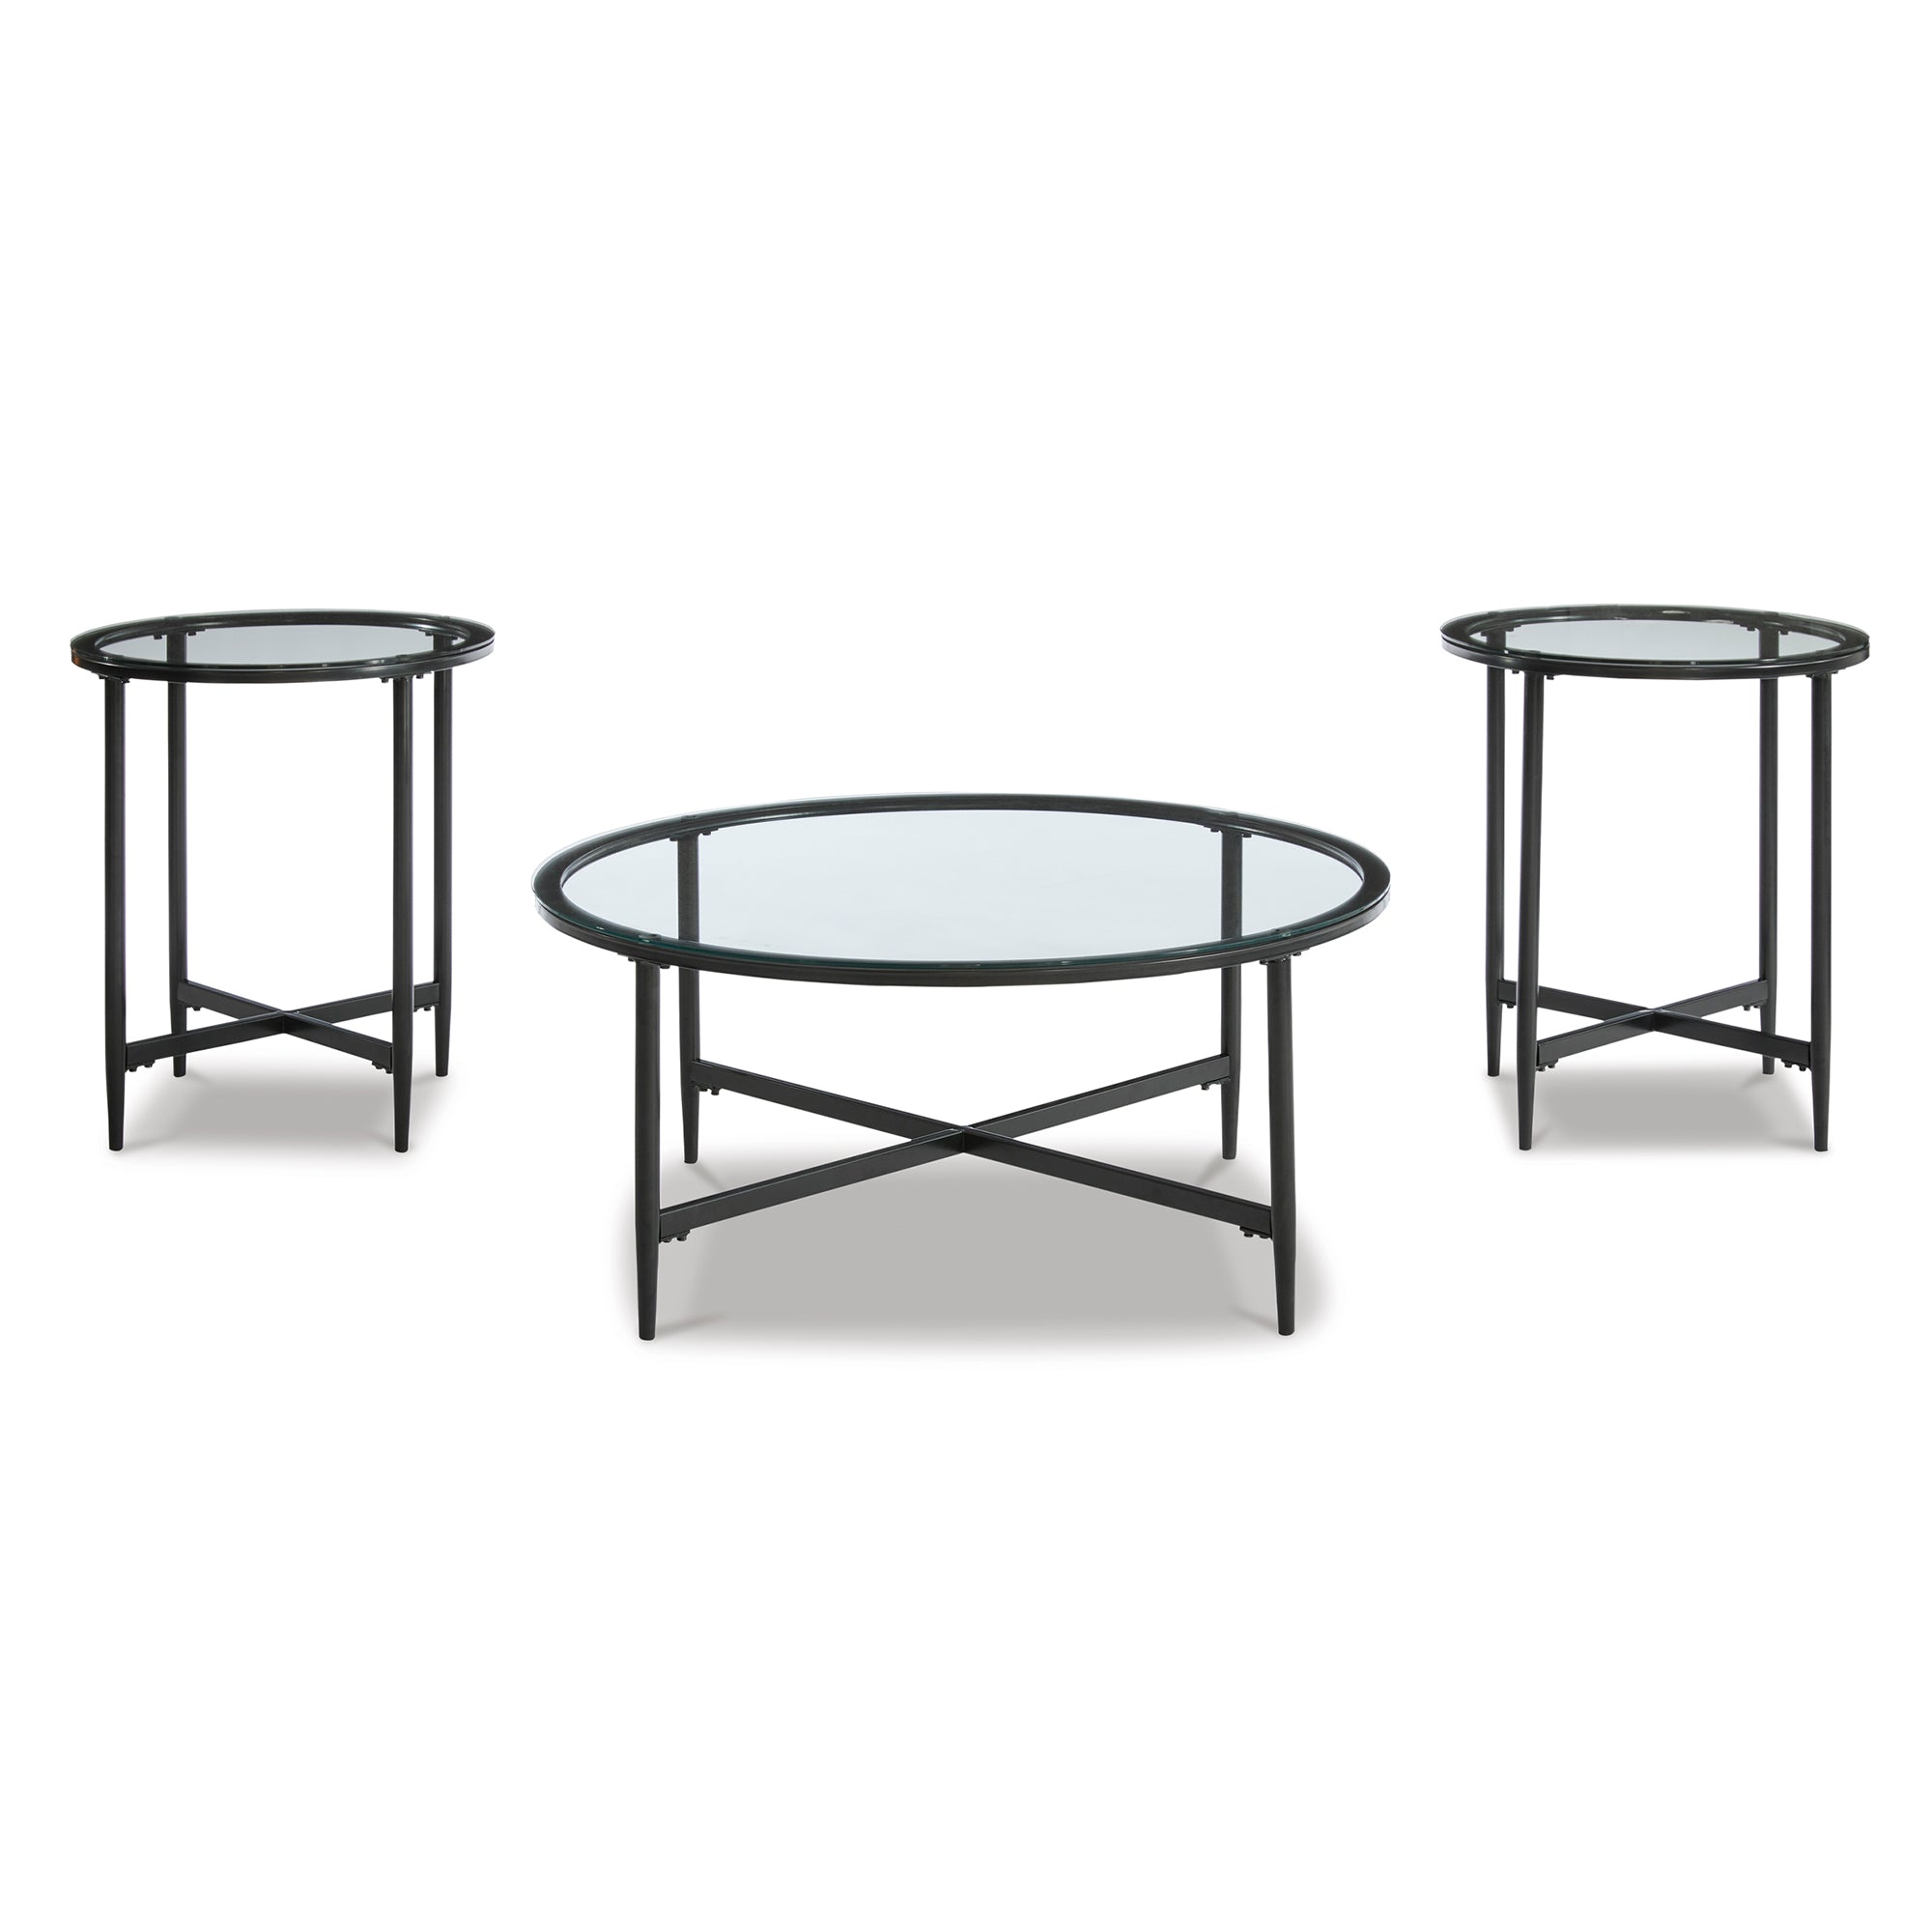 Stetzer Table (Set of 3)